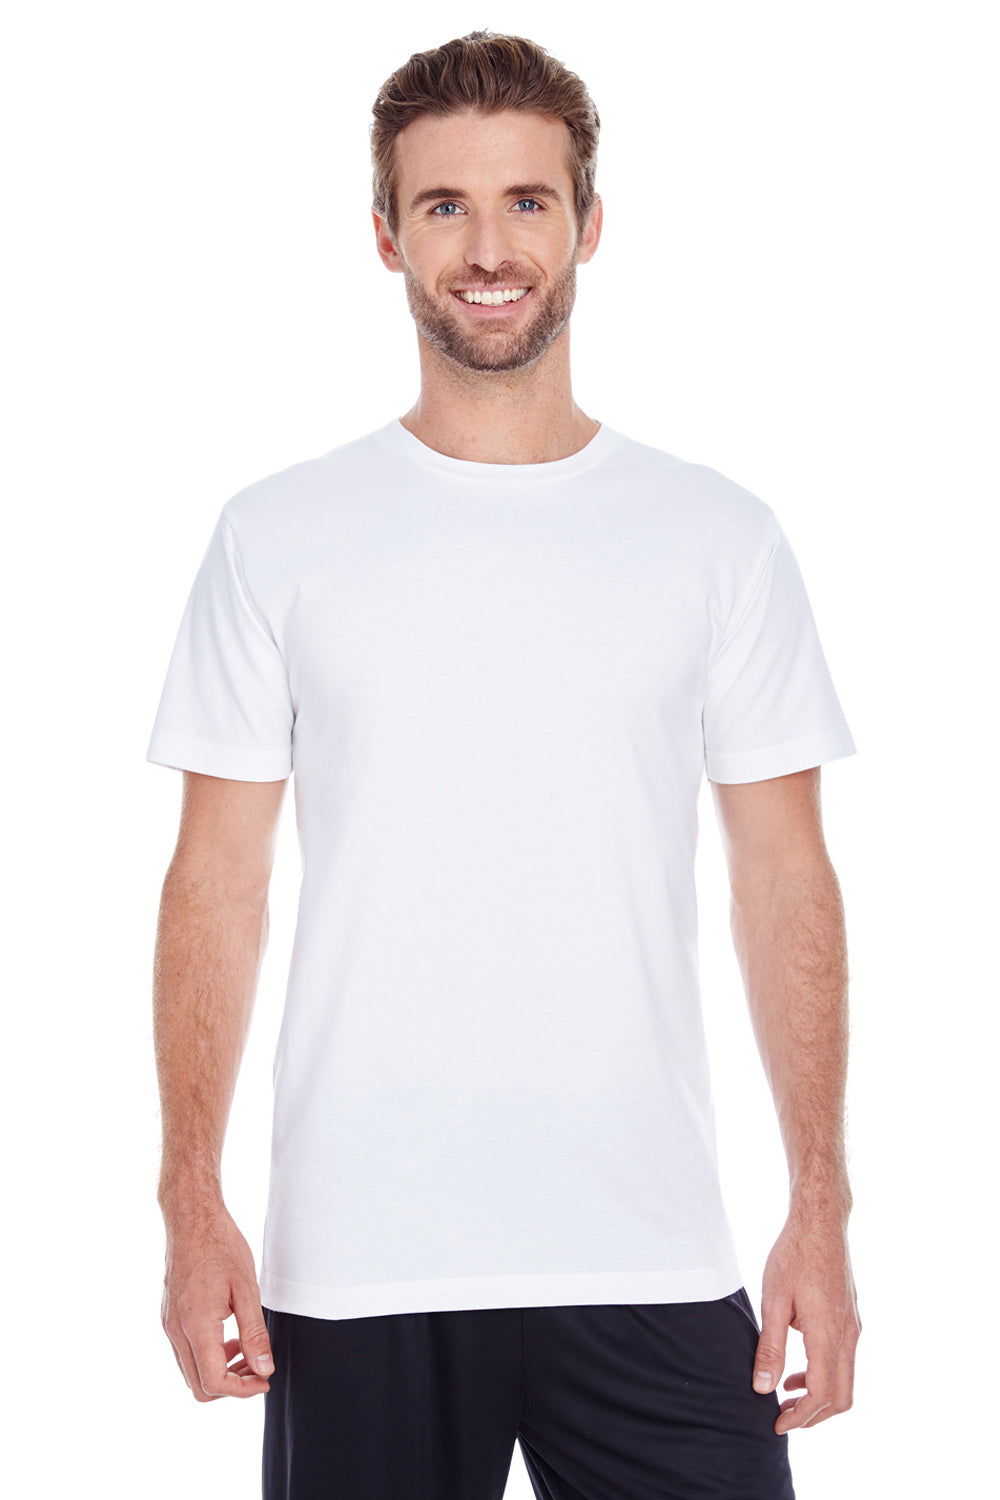 LAT 6980 Mens Premium Jersey Short Sleeve Crewneck T-Shirt White Front